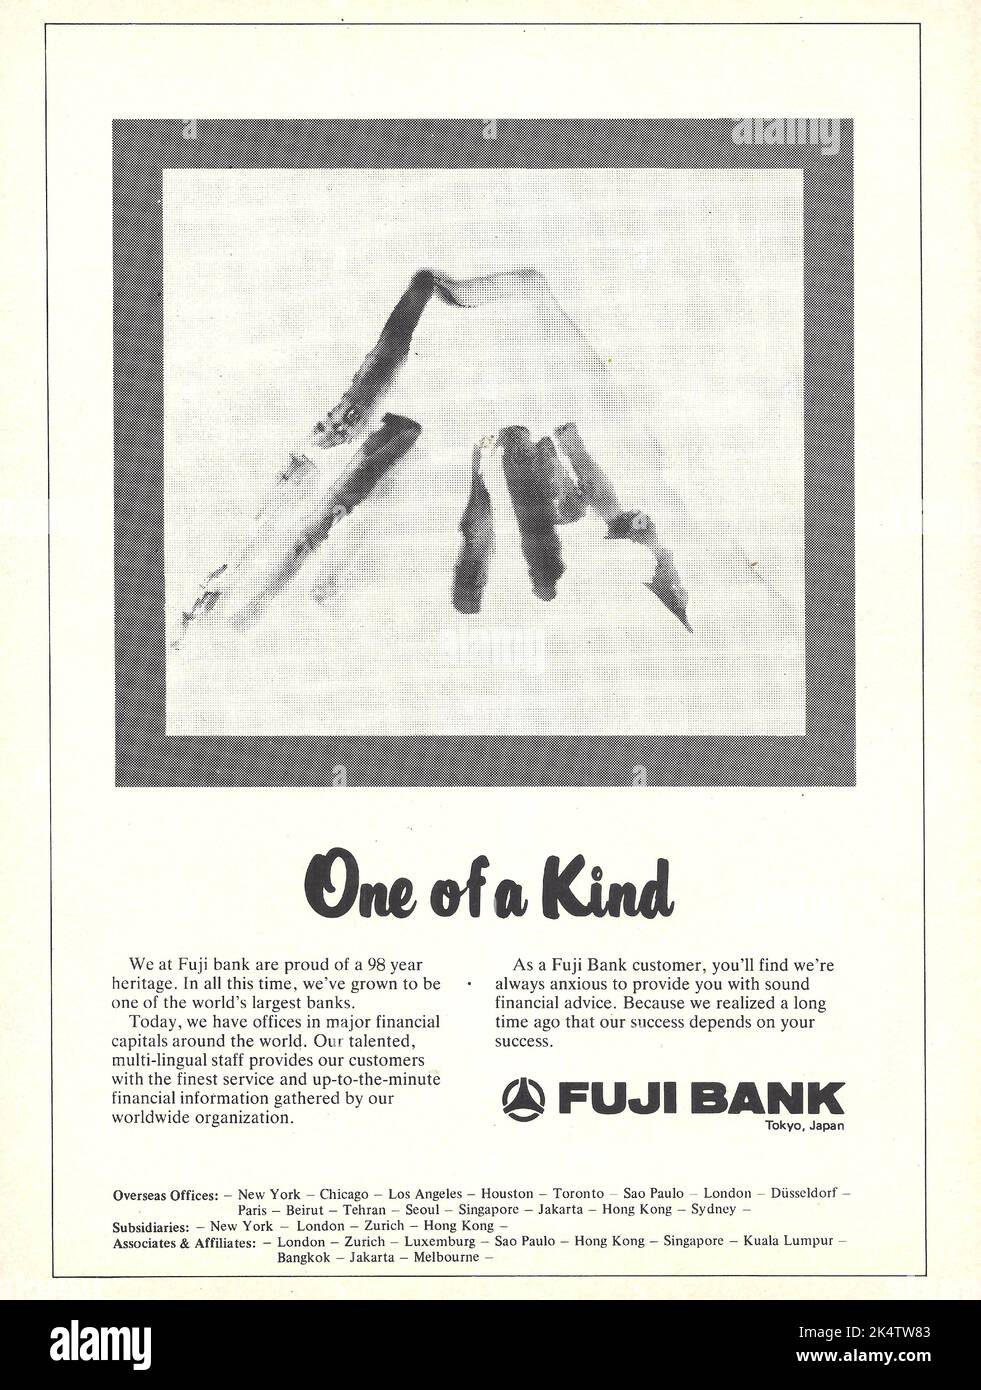 Fuji bank Tokyo Japan financial institution advertisement bank magazine advert 1980s 1970s Stock Photo